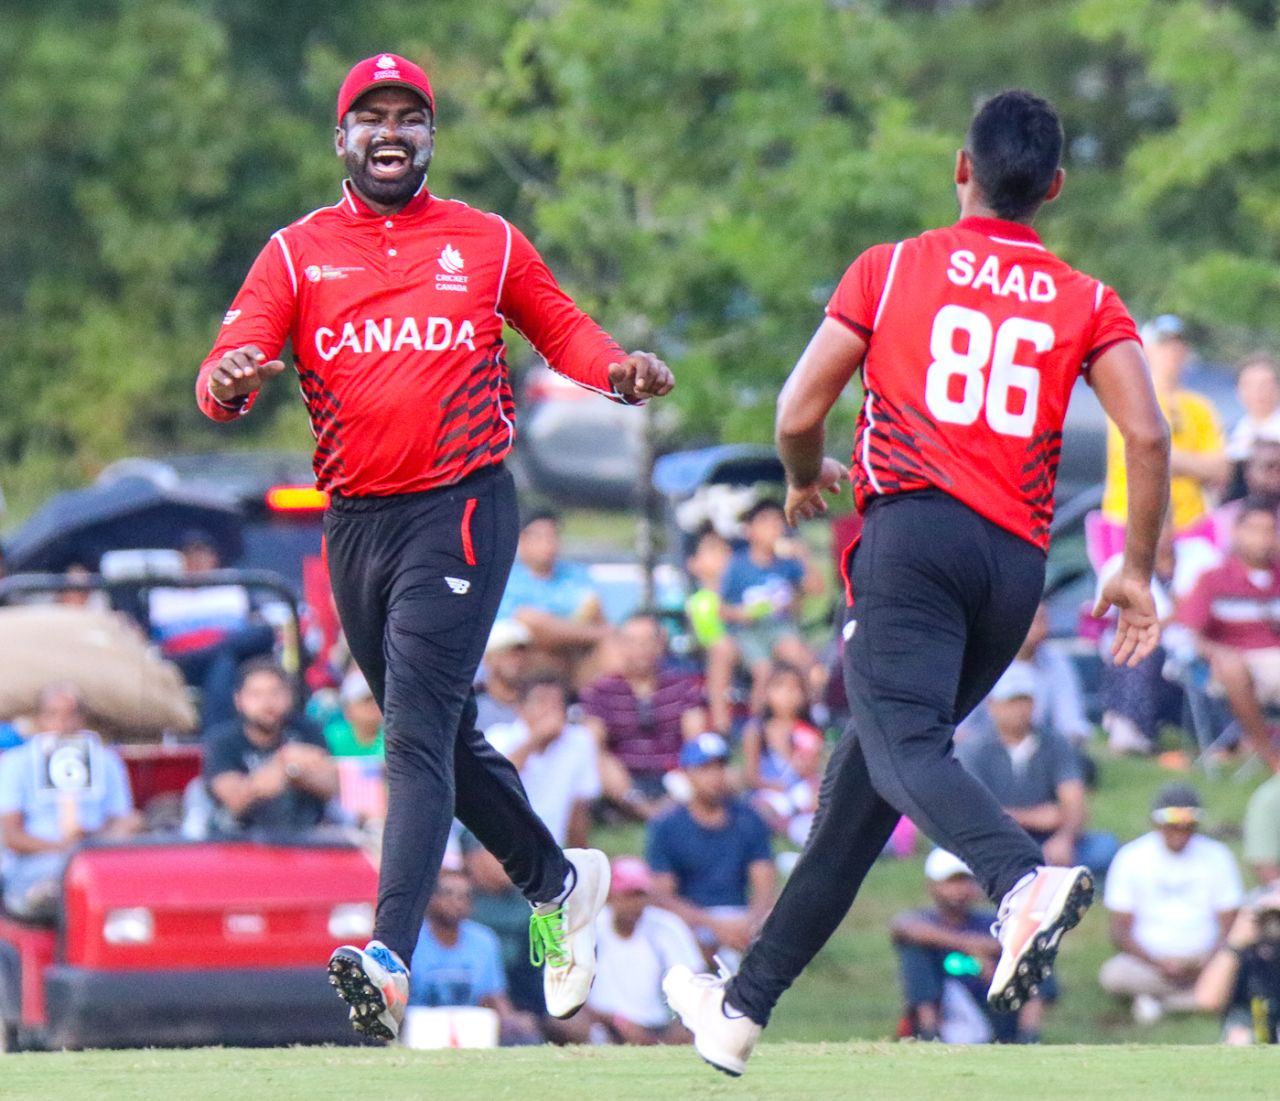 Srimantha Wijeyeratne celebrates after a Canada wicket, USA v Canada, ICC World Twenty20 Americas Sub Regional Qualifier A, Morrisville, September 22, 2018